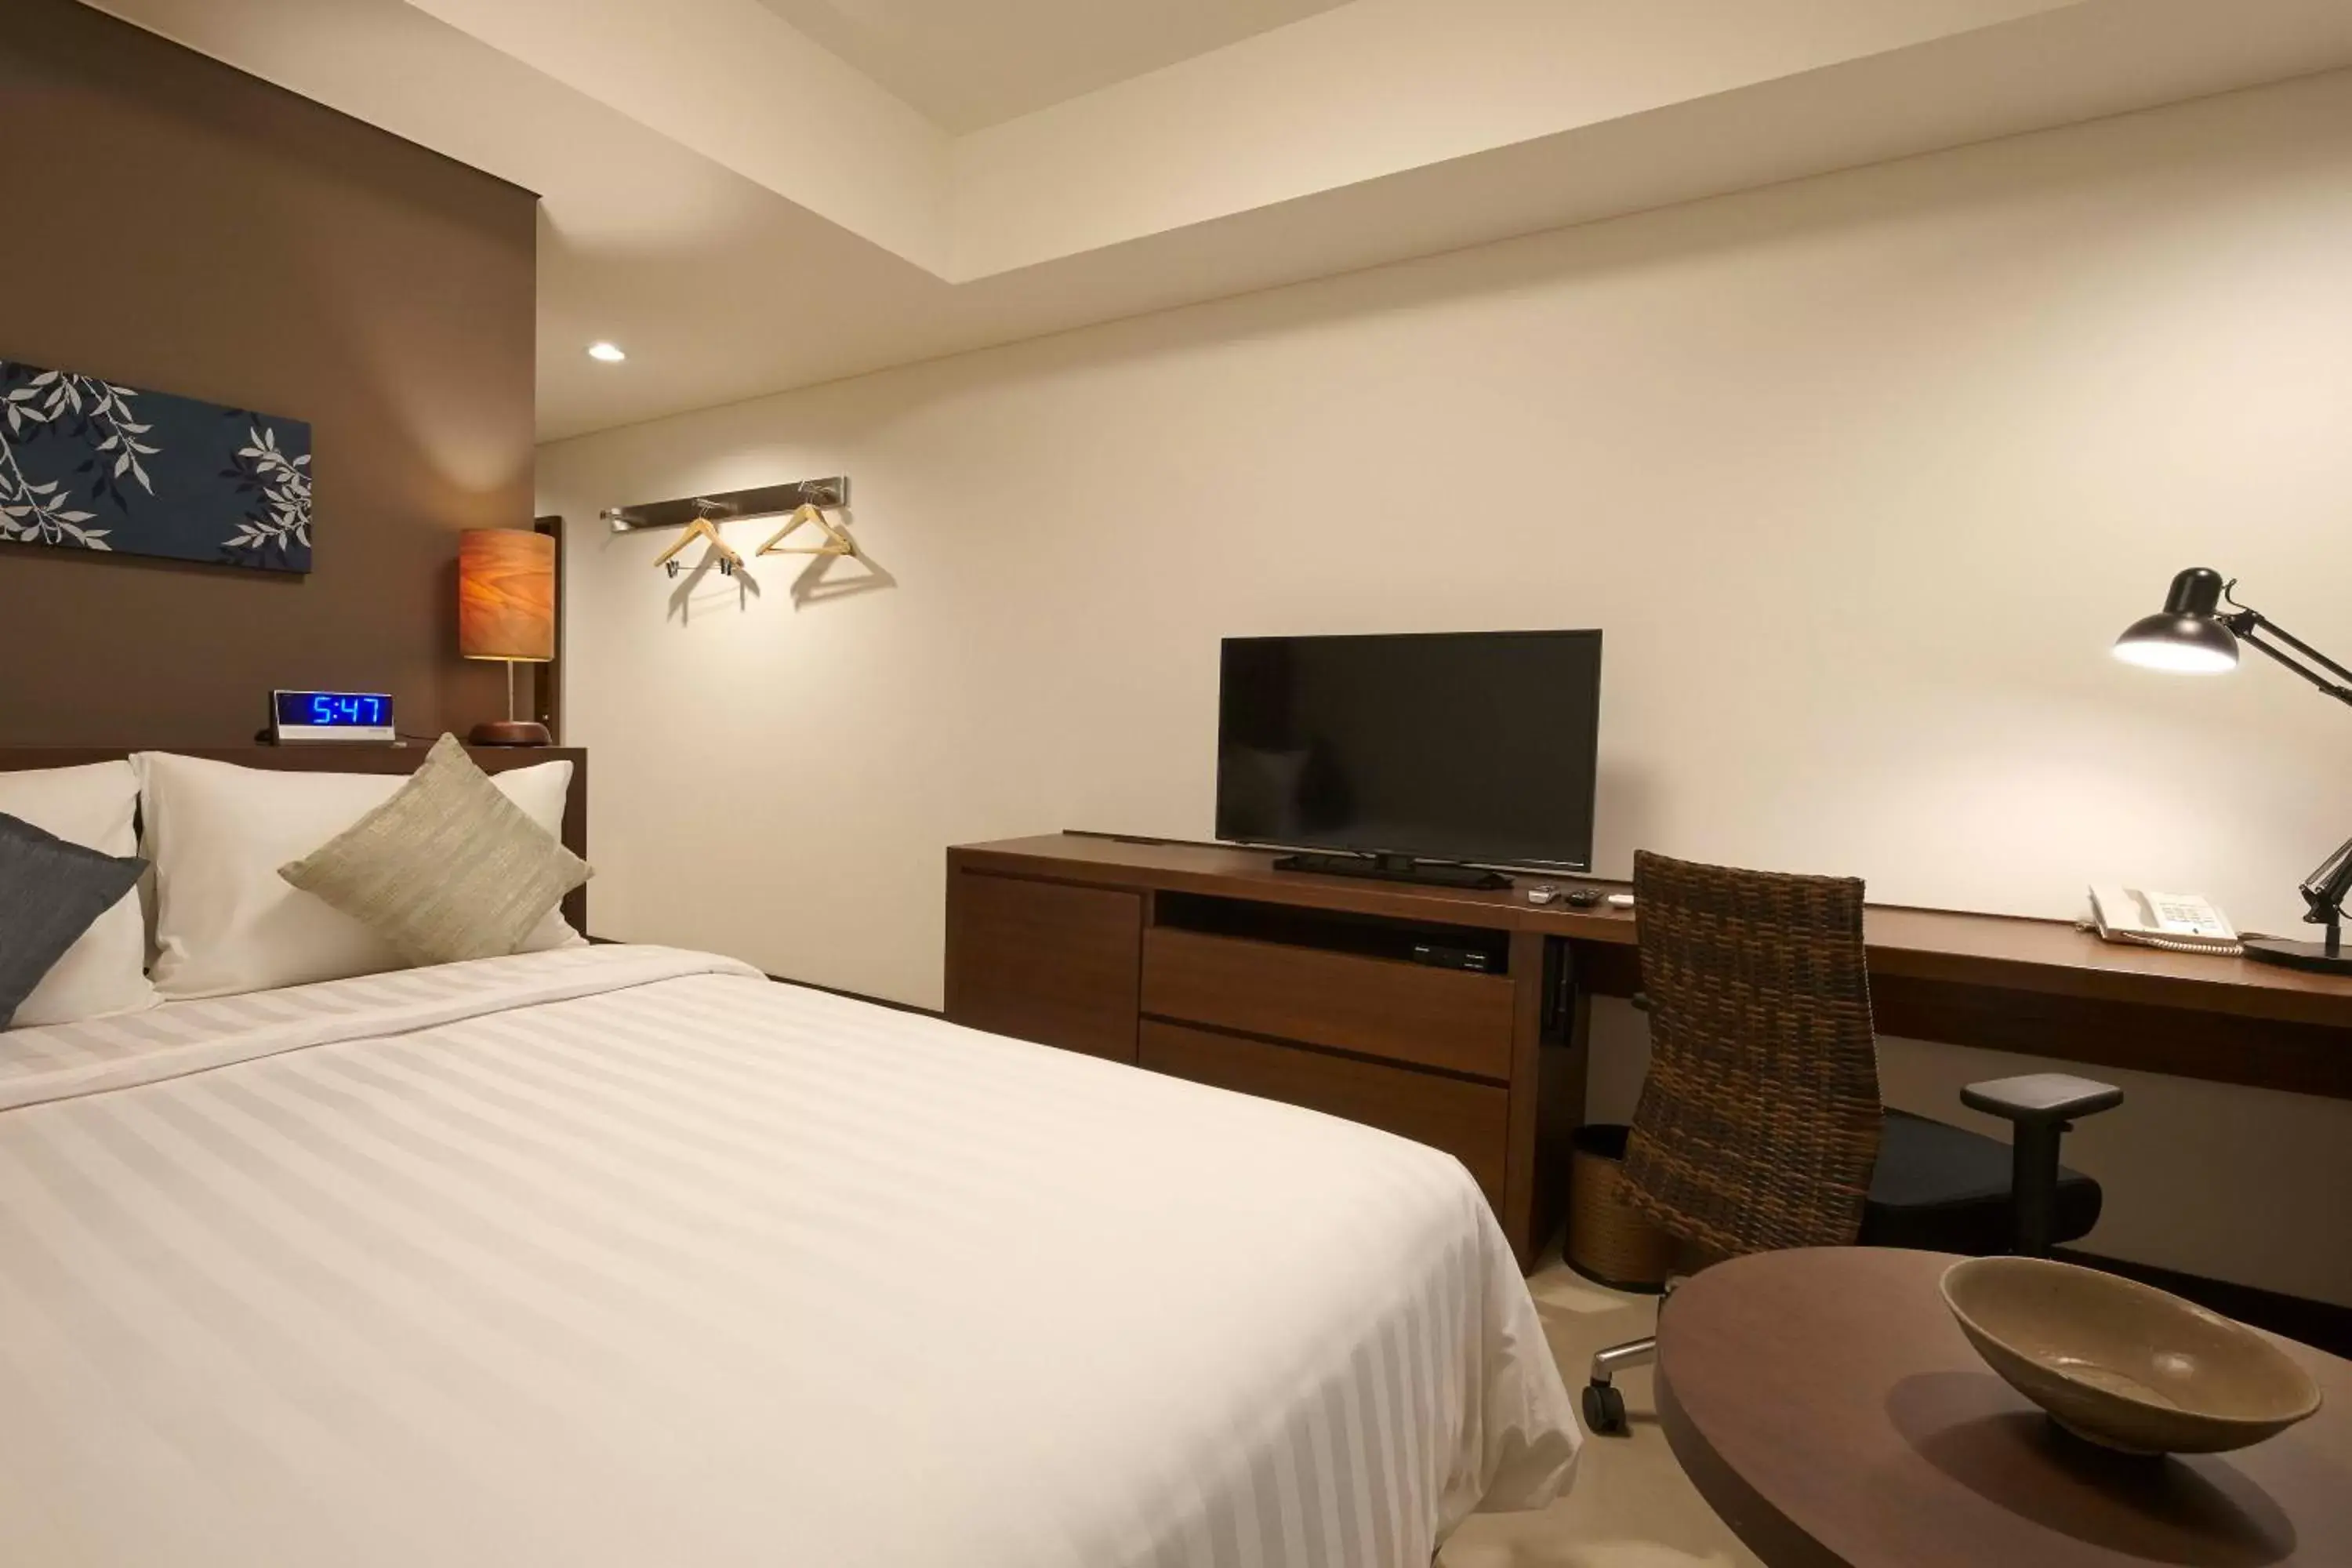 Bed, Room Photo in Axia South Cikarang Service Apartment